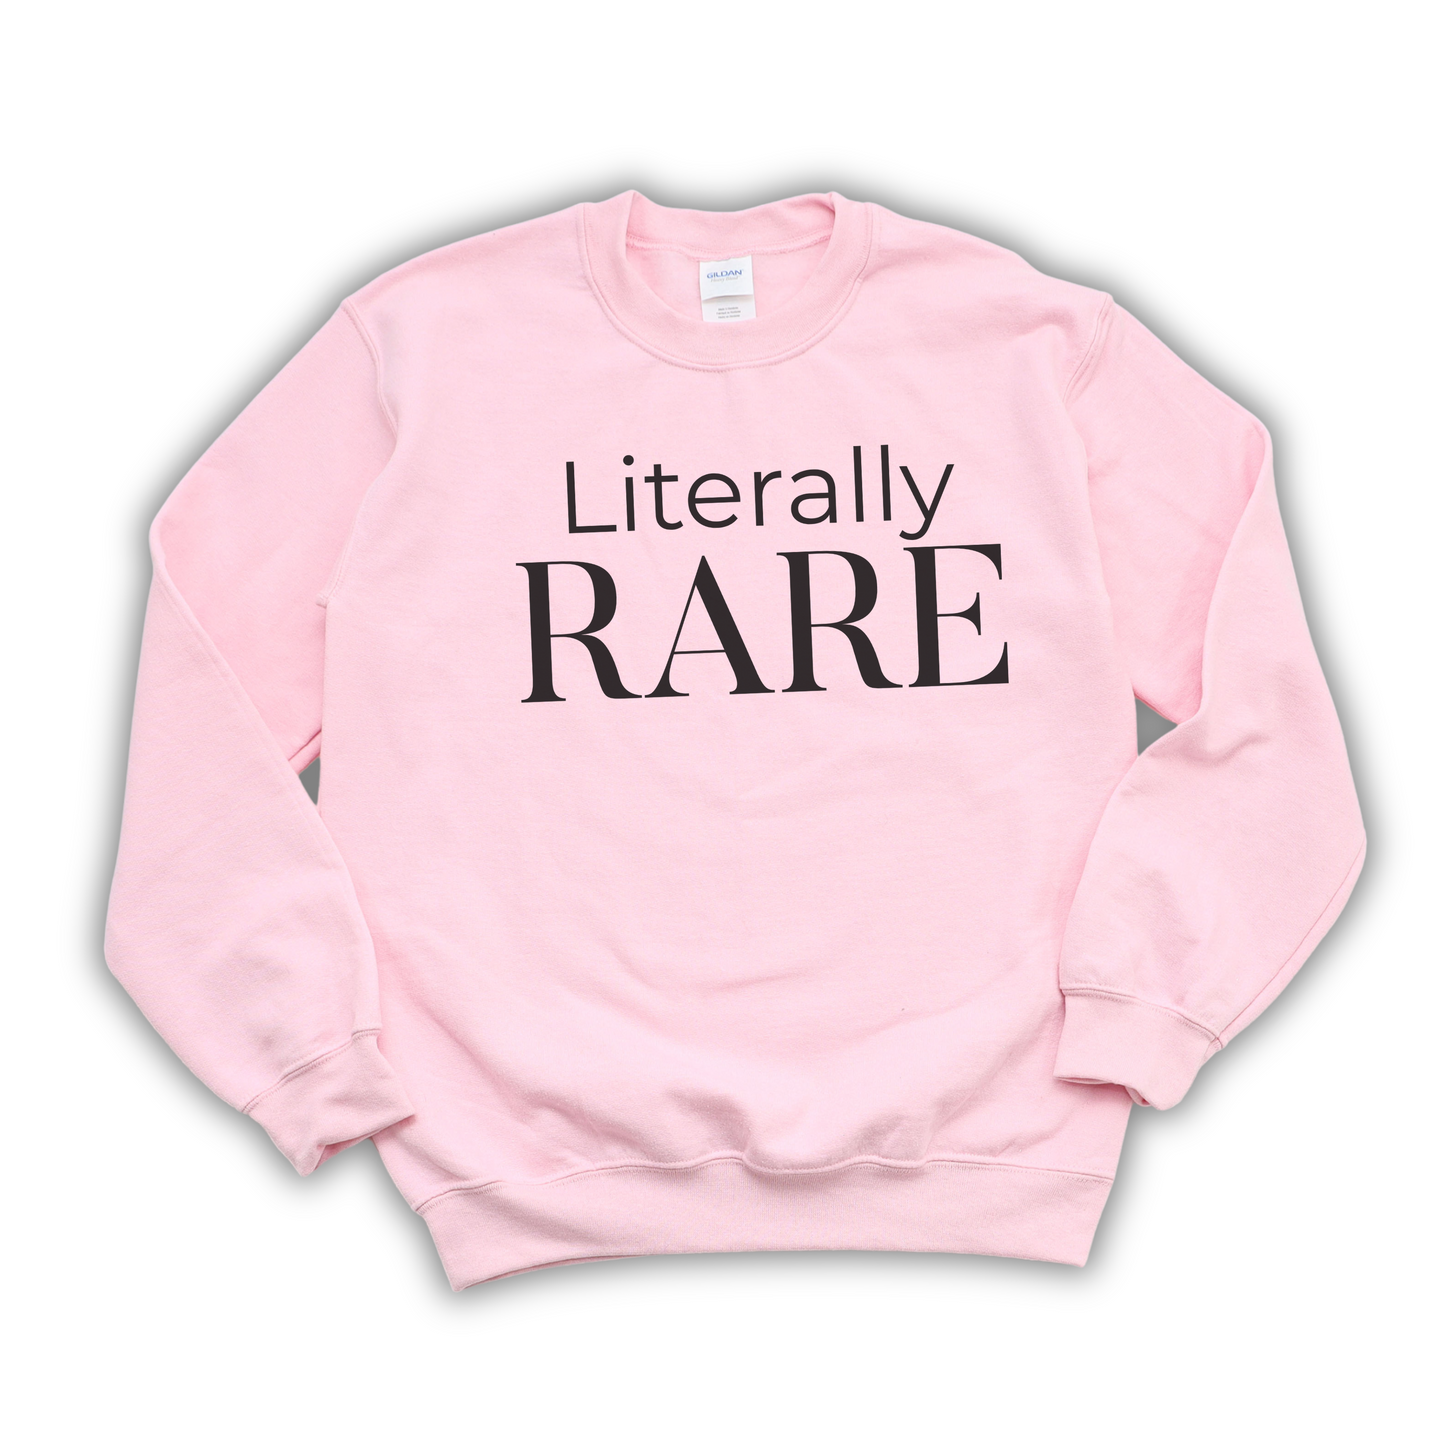 Literally Rare Sweatshirt